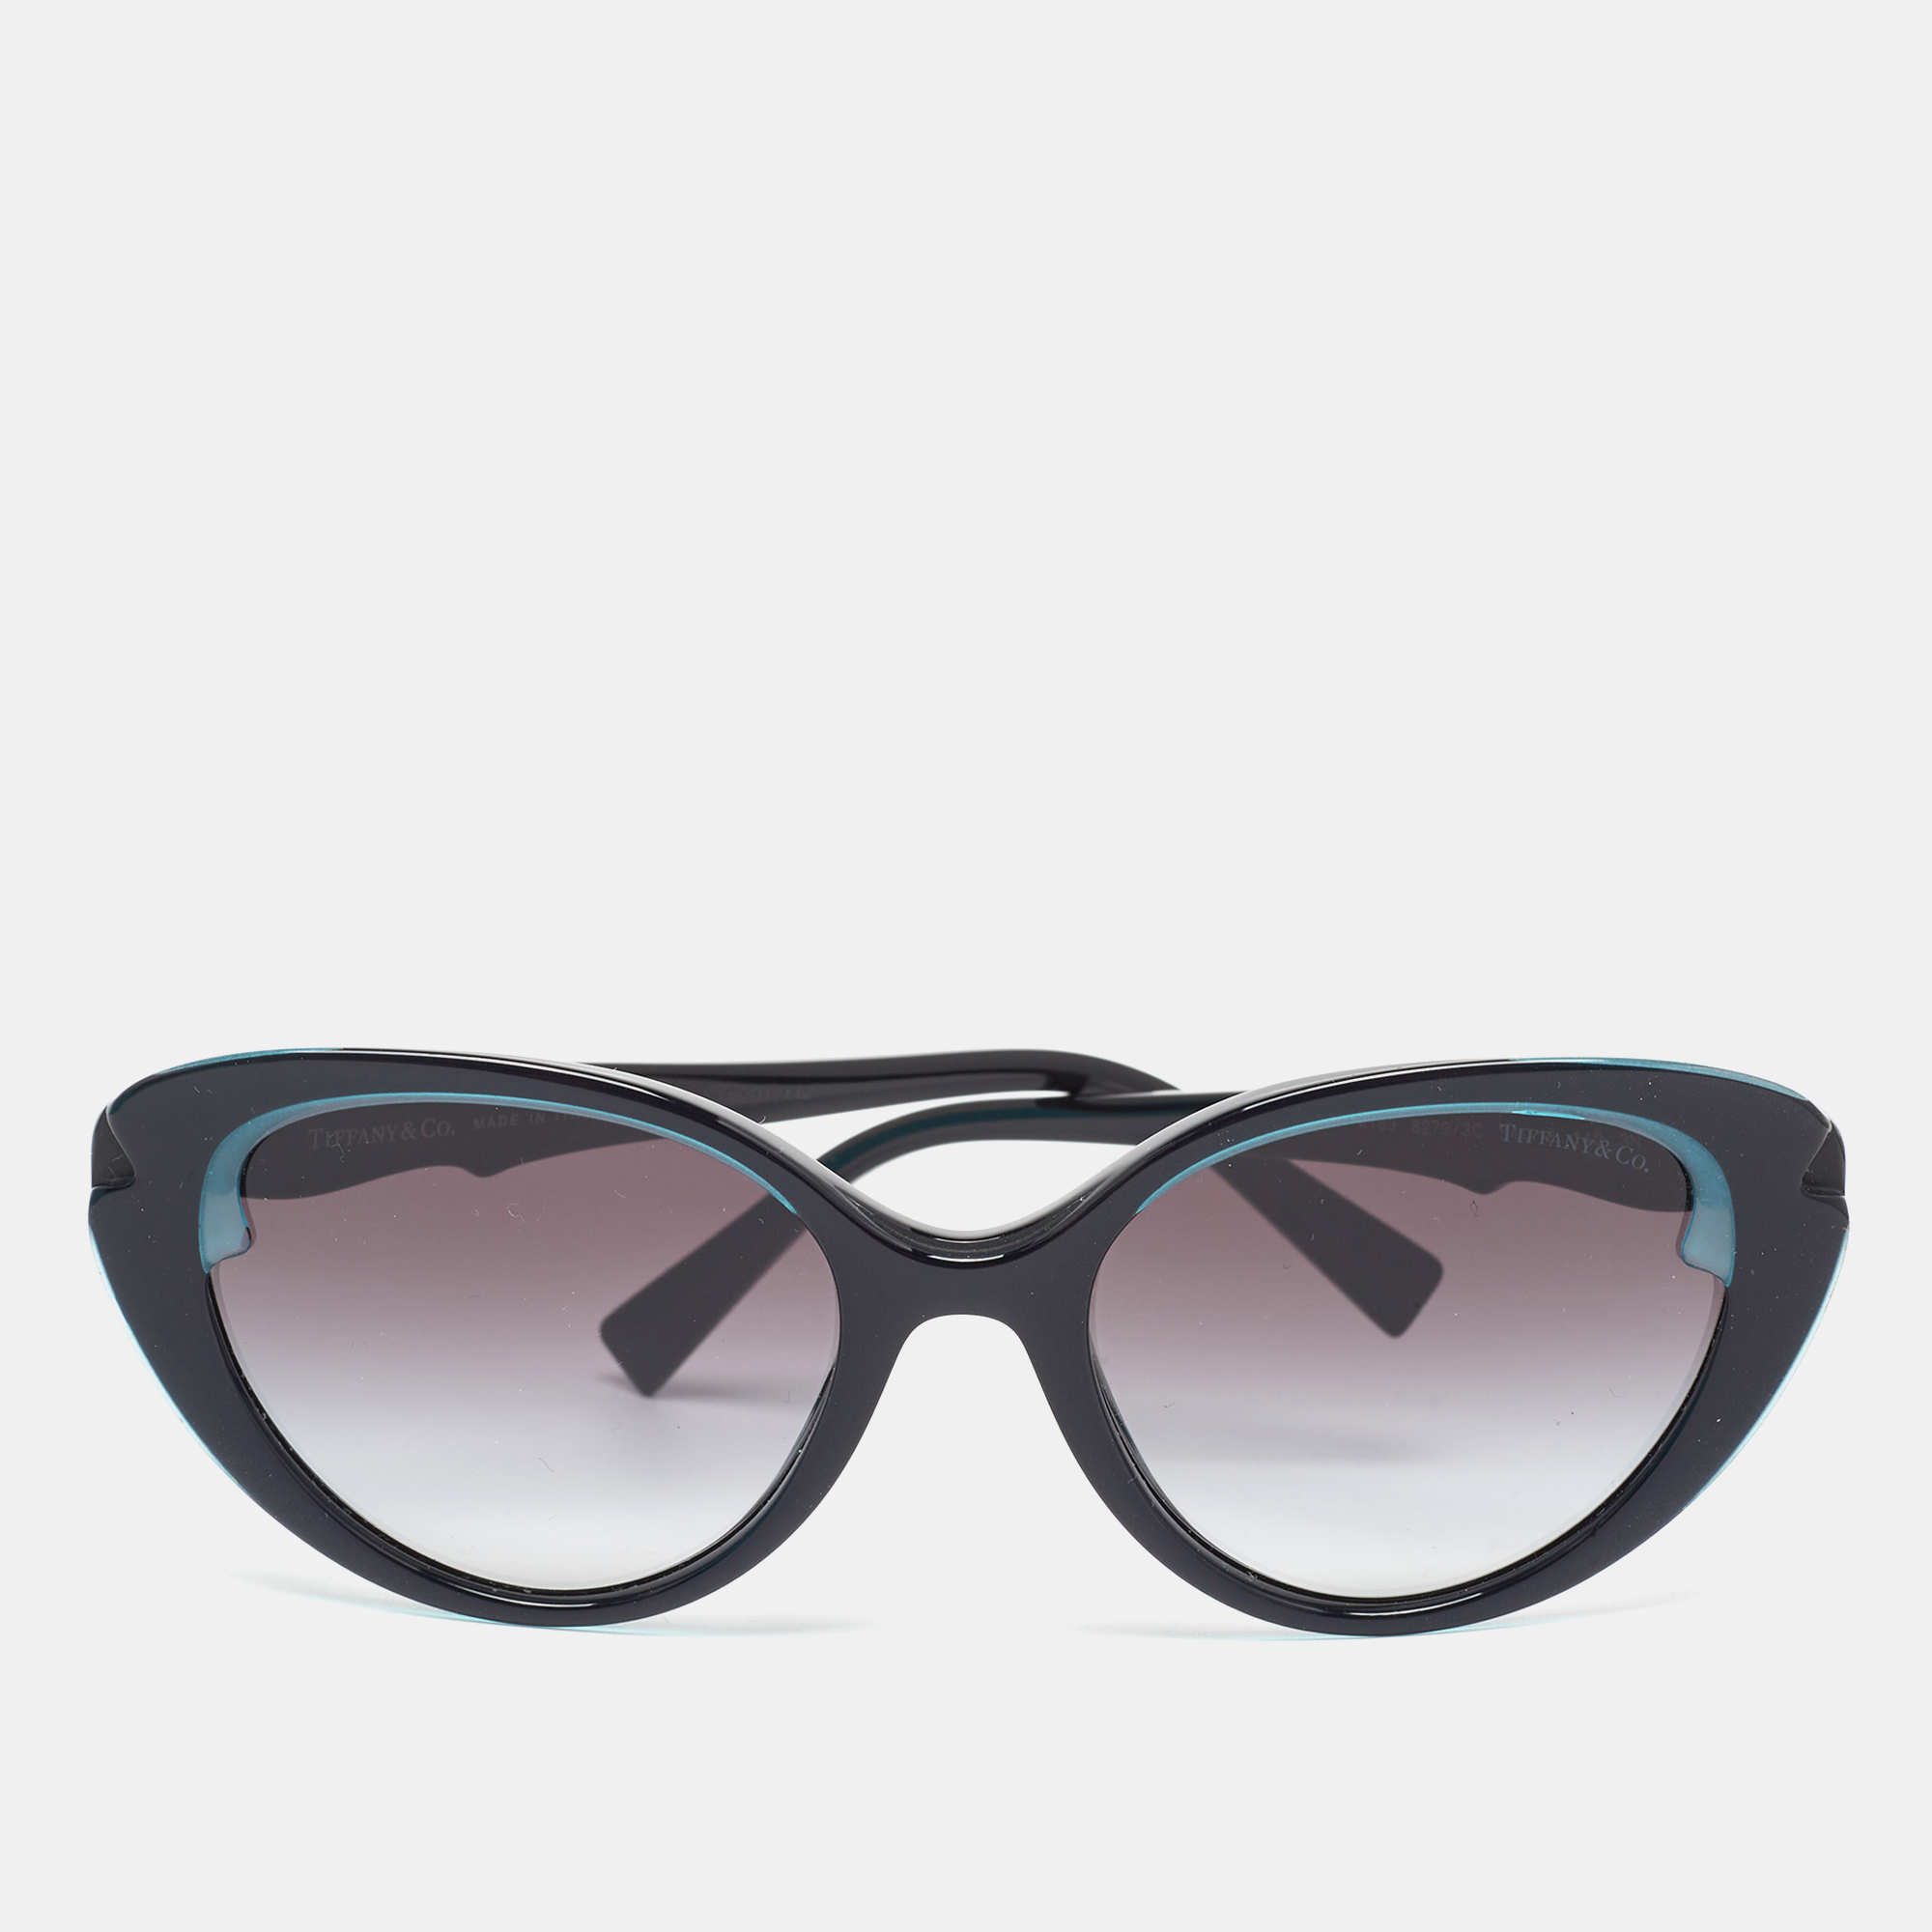 Tiffany & co. black/blue tf 4163 cat eye sunglasses